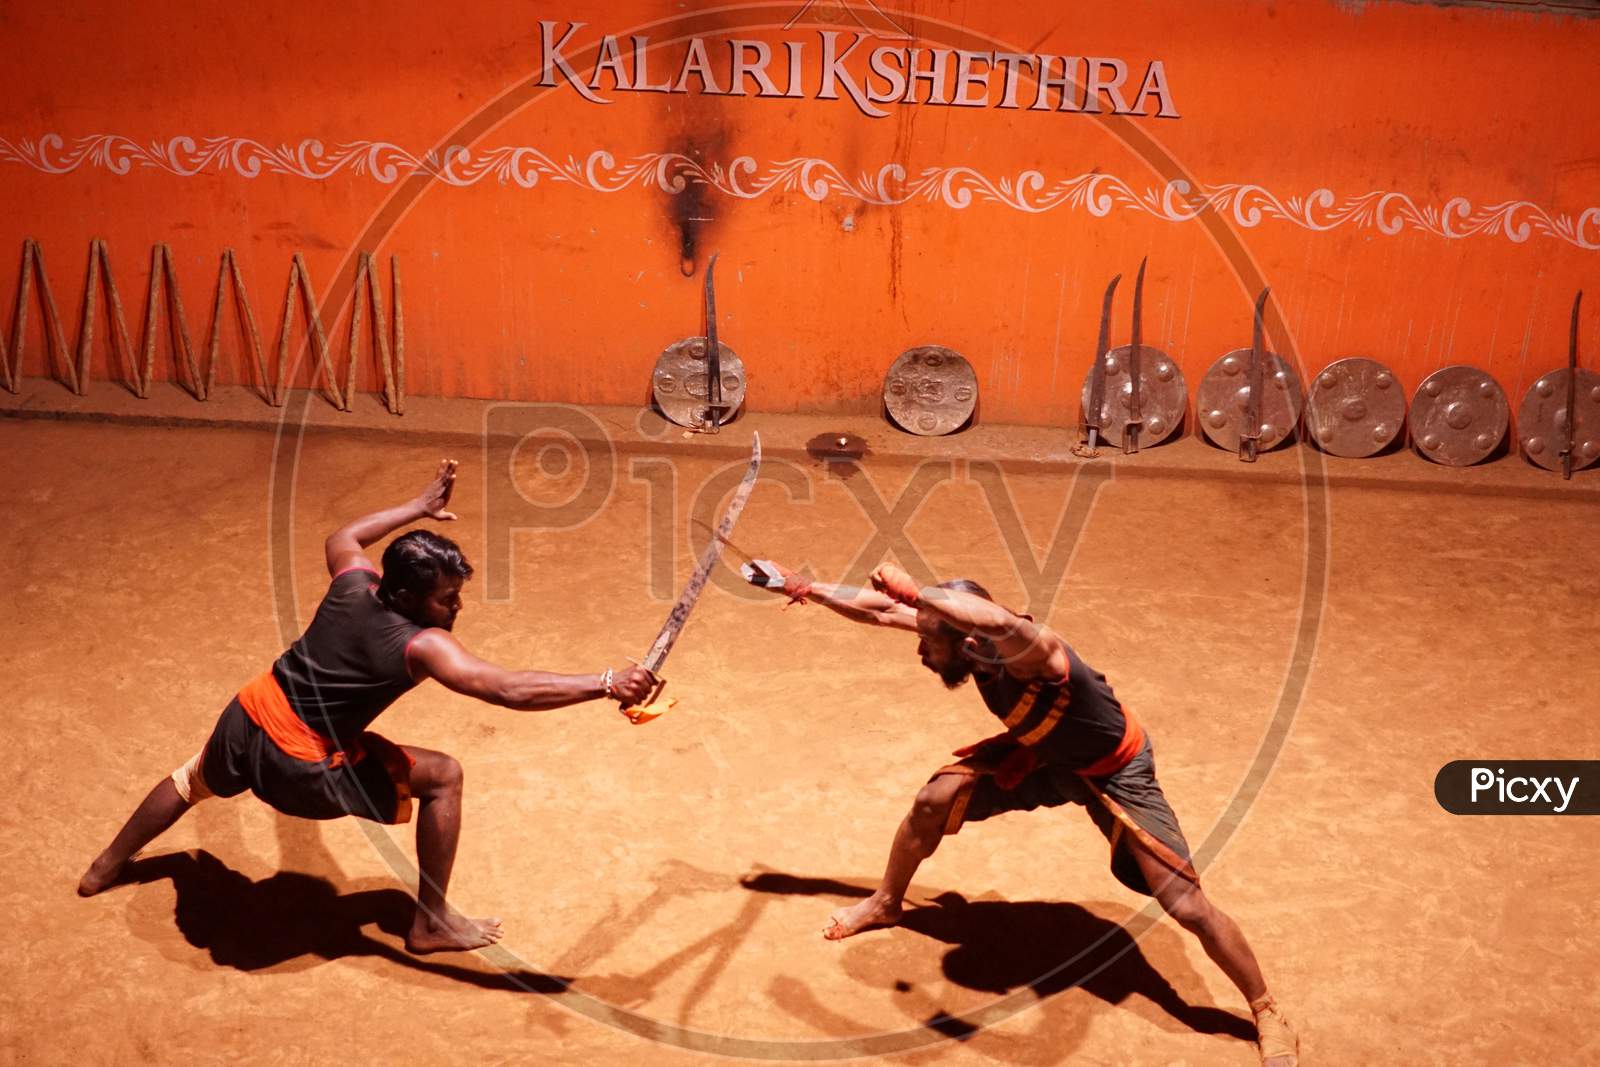 Indian men during sword fight